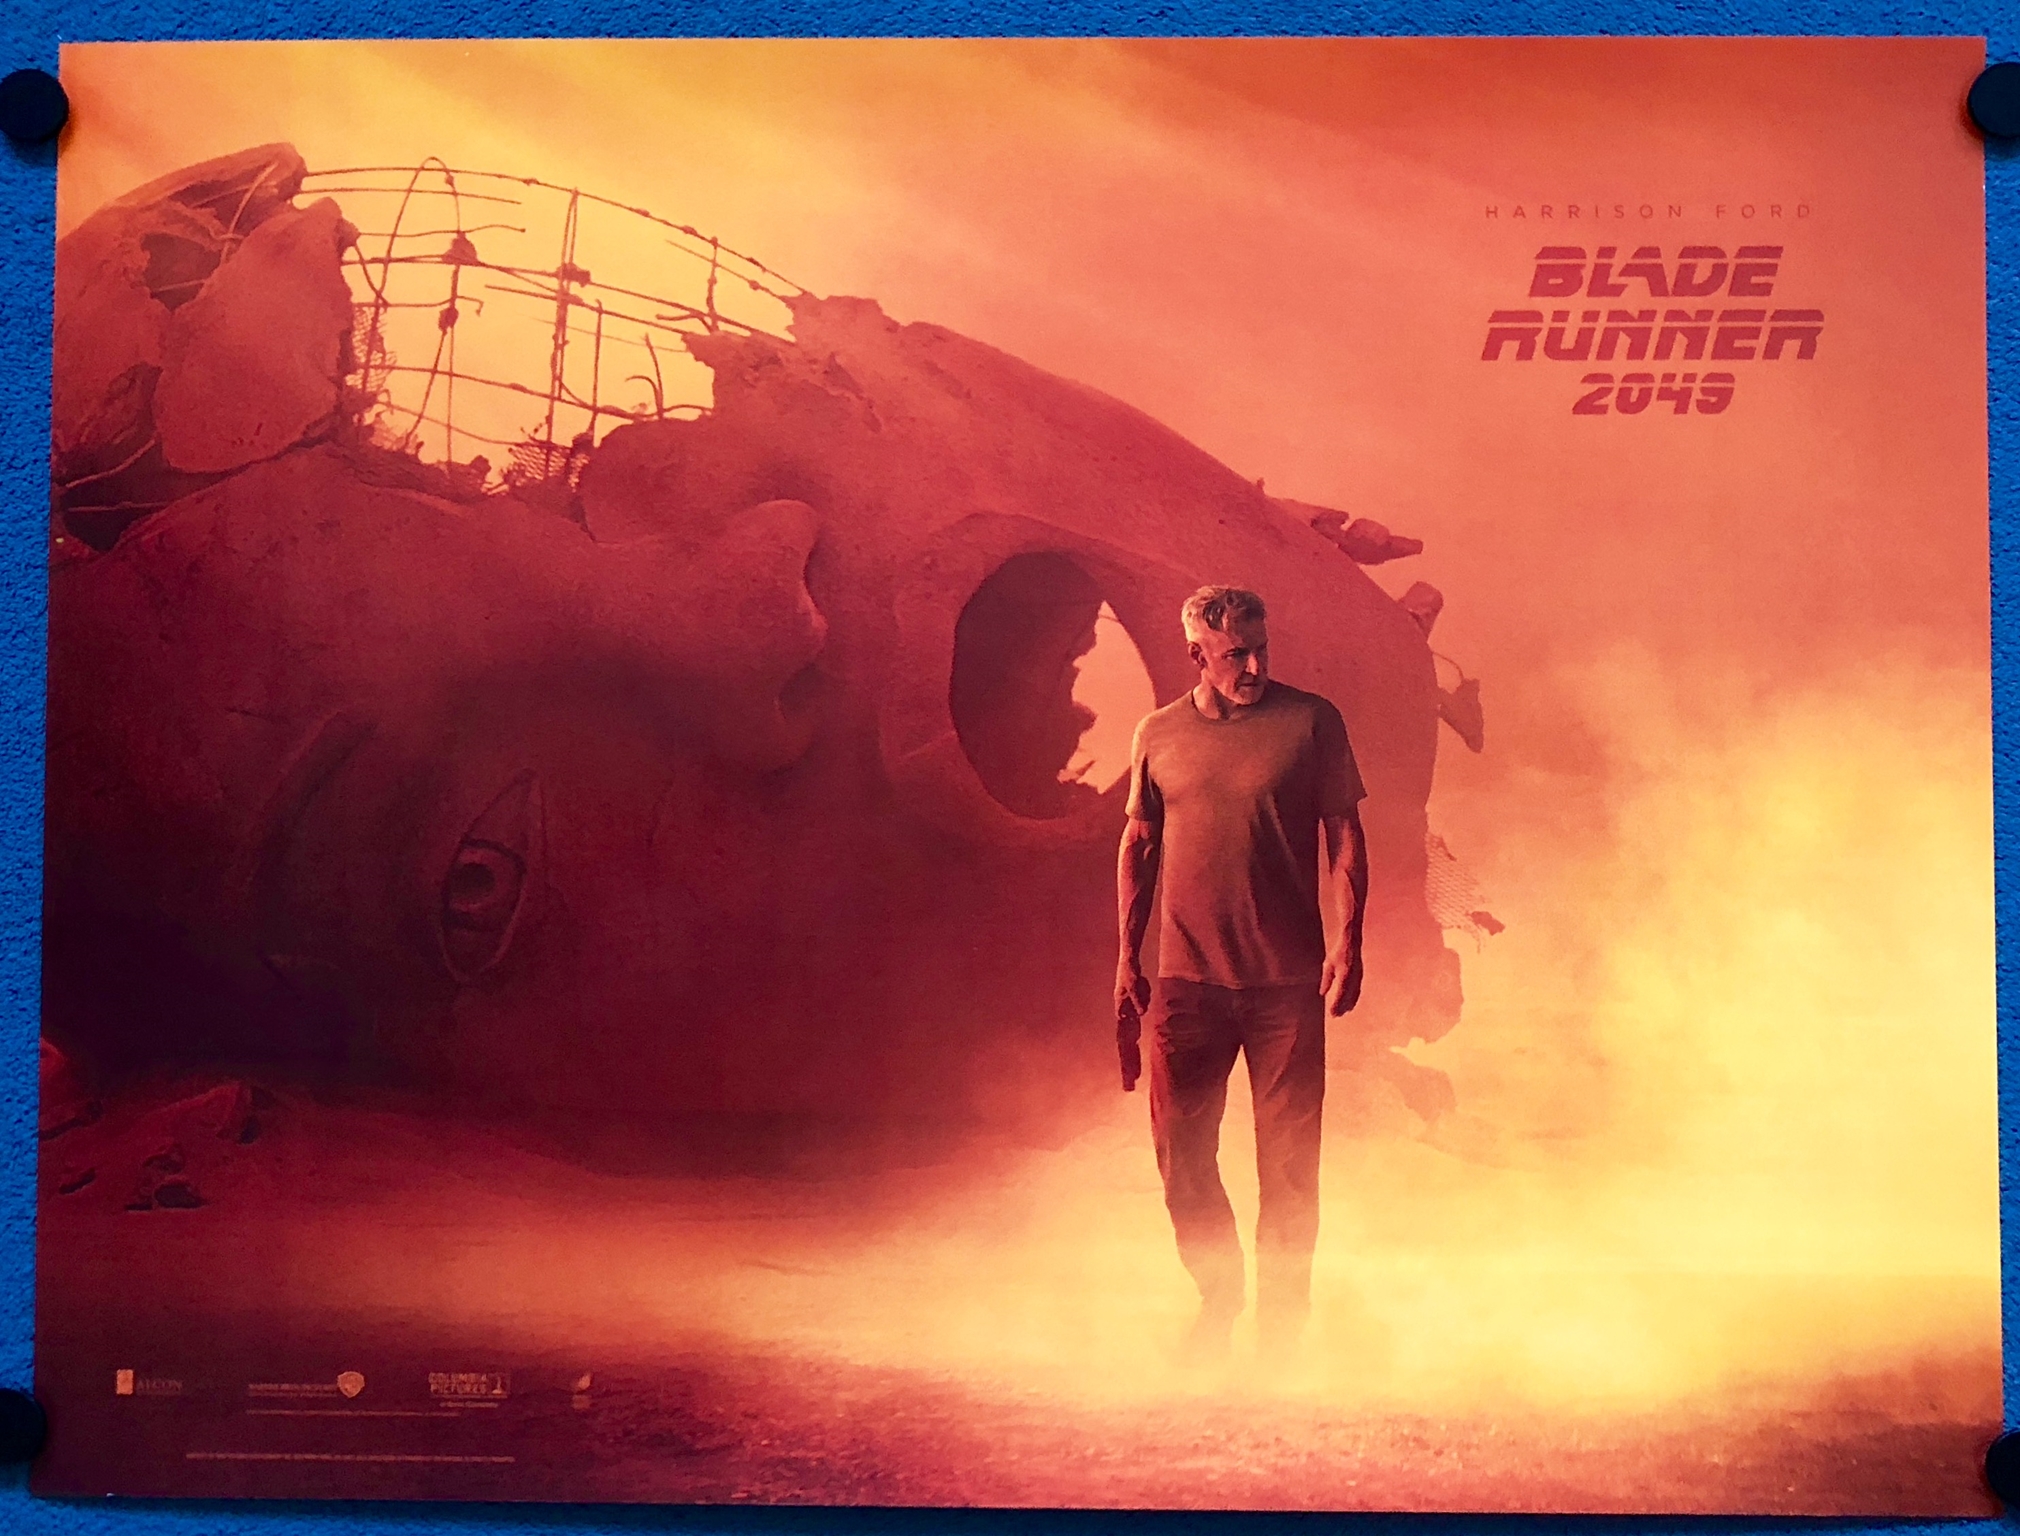 BLADE RUNNER 2049 (2017) - Lot x 3 - 3 x British UK Quad Film Posters - Advance 'Harrison Ford' - Image 2 of 4